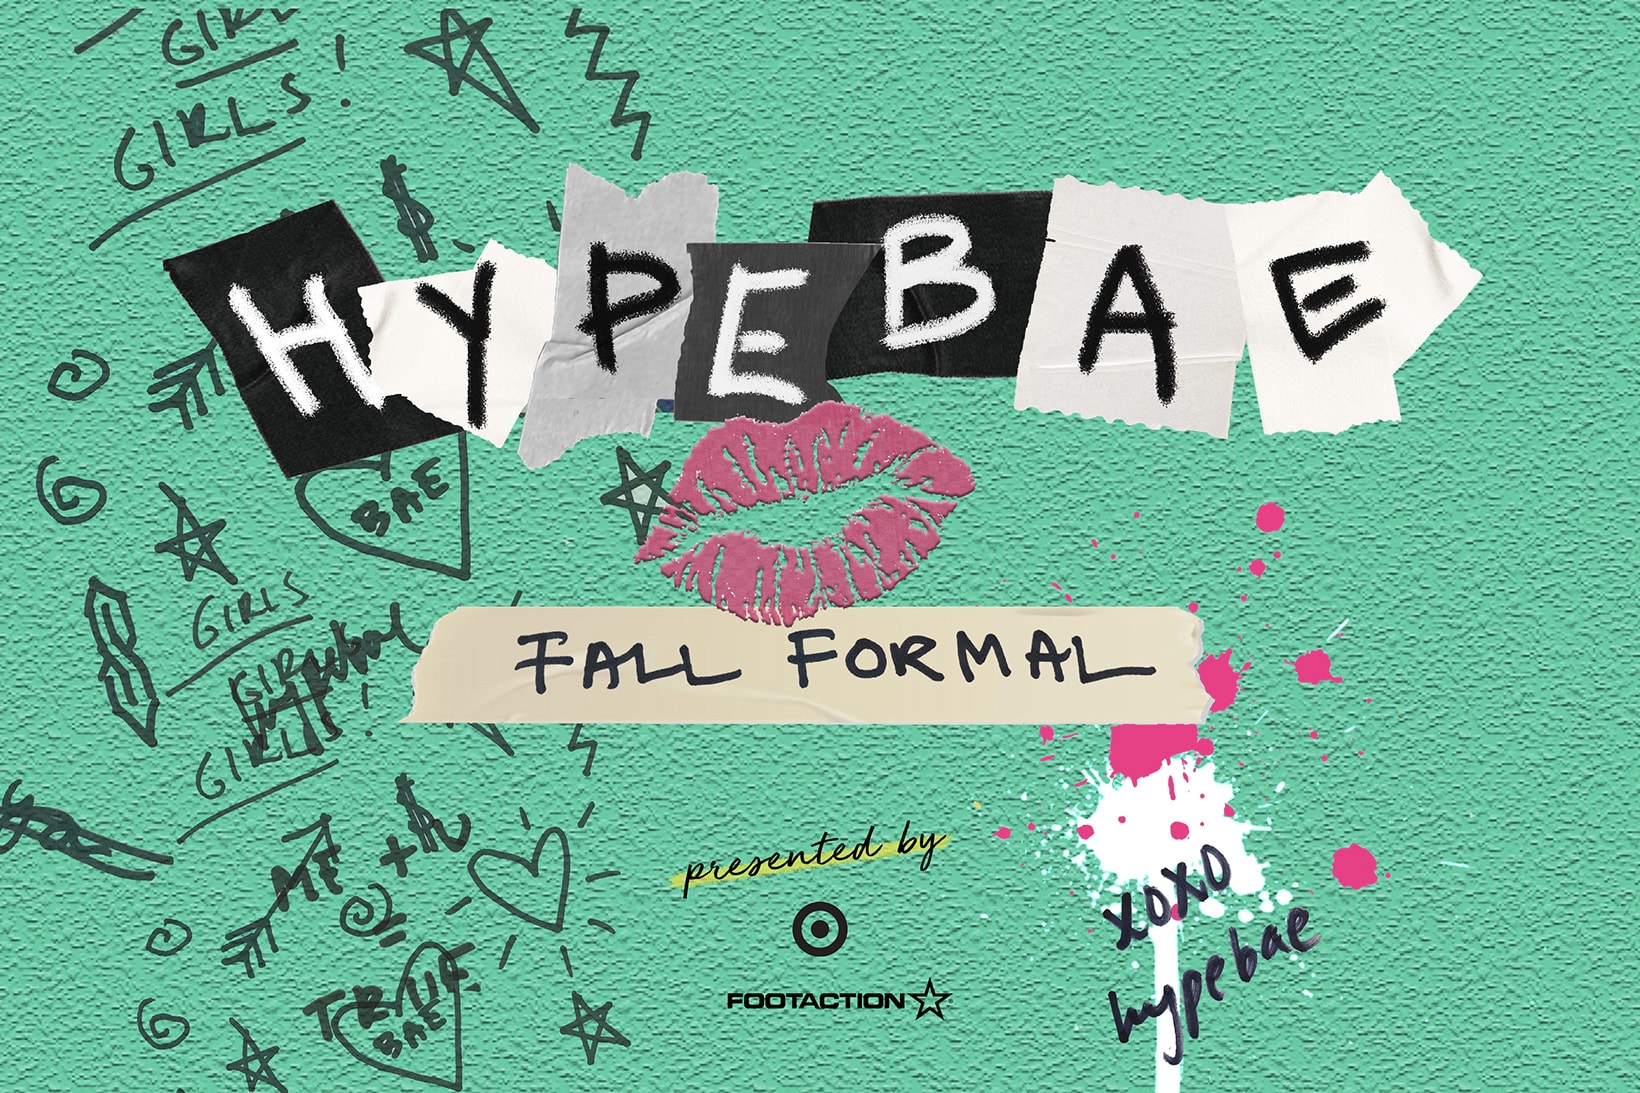 Hypebae Fall Formal 3 Year Anniversary party event new york city nyc nyfw fashion week